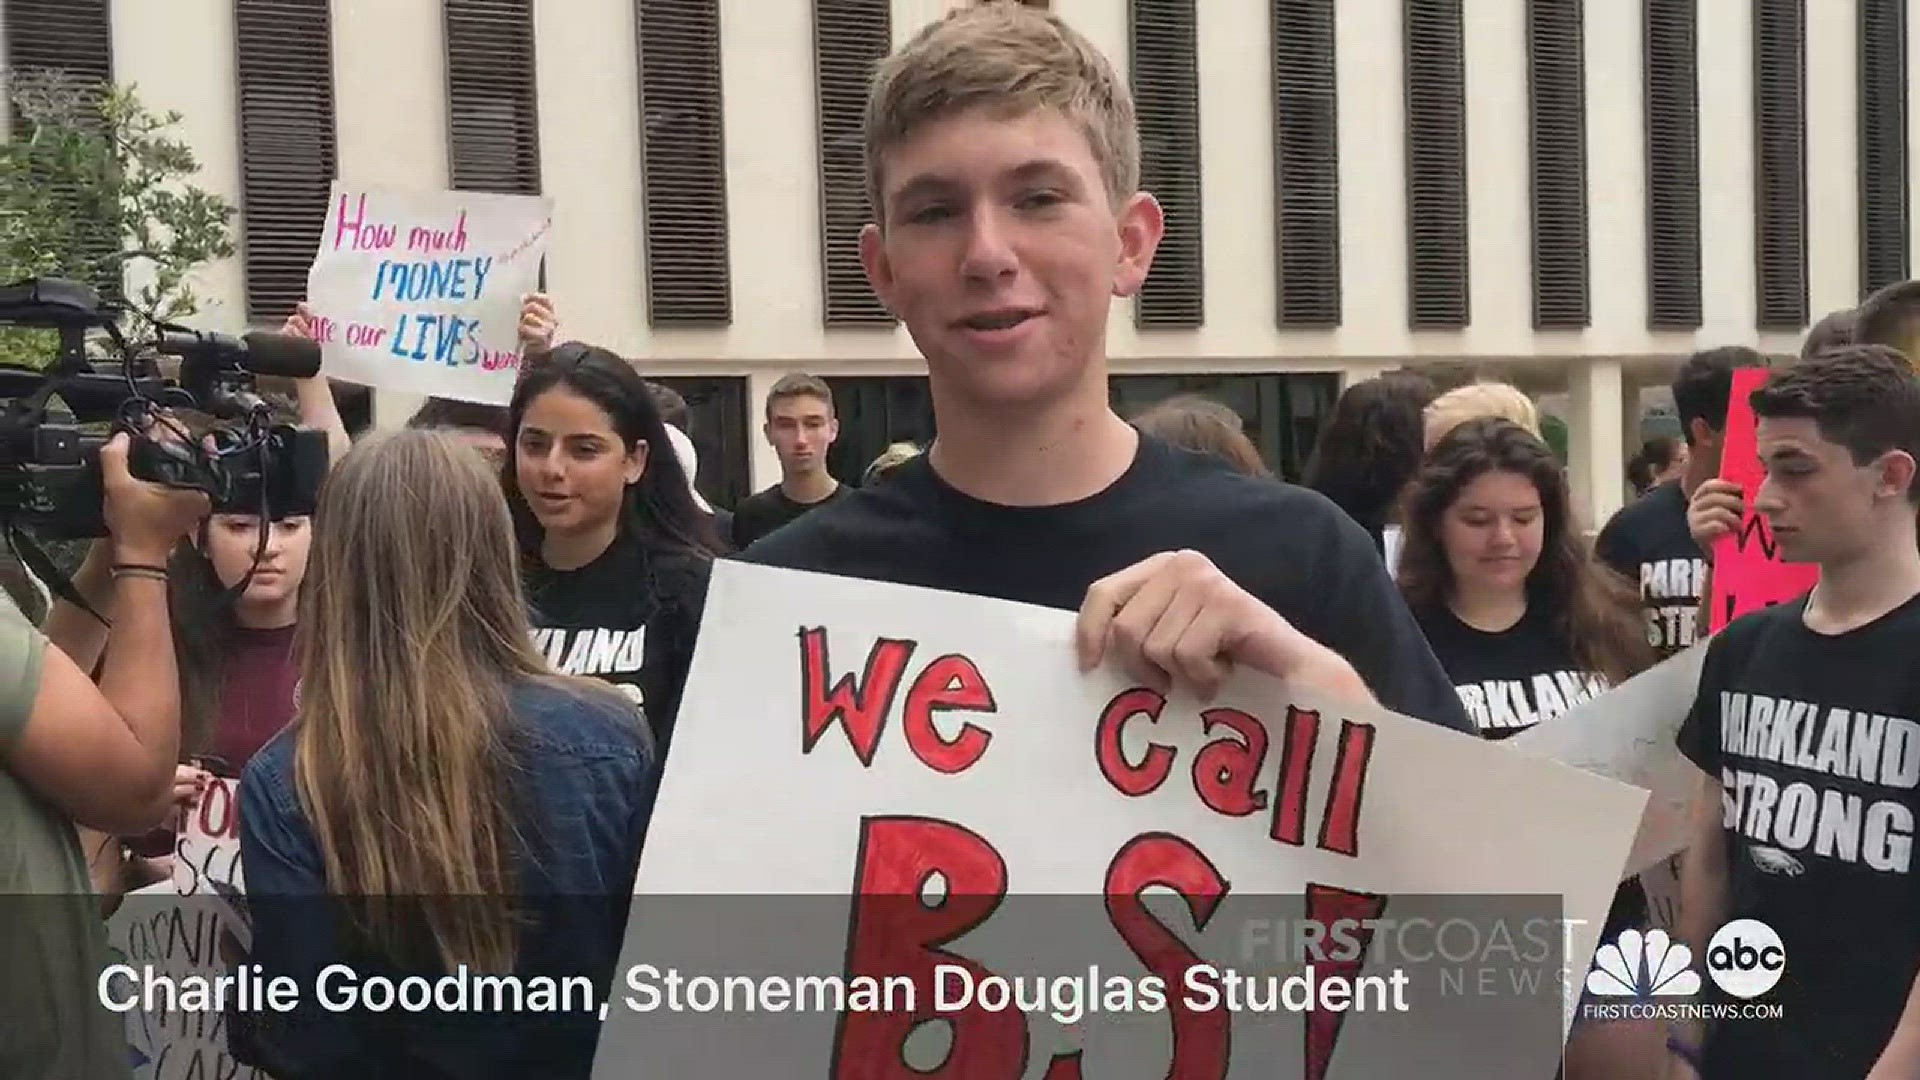 Charlie Goodman is a Stoneman Douglas student who says he wants change.